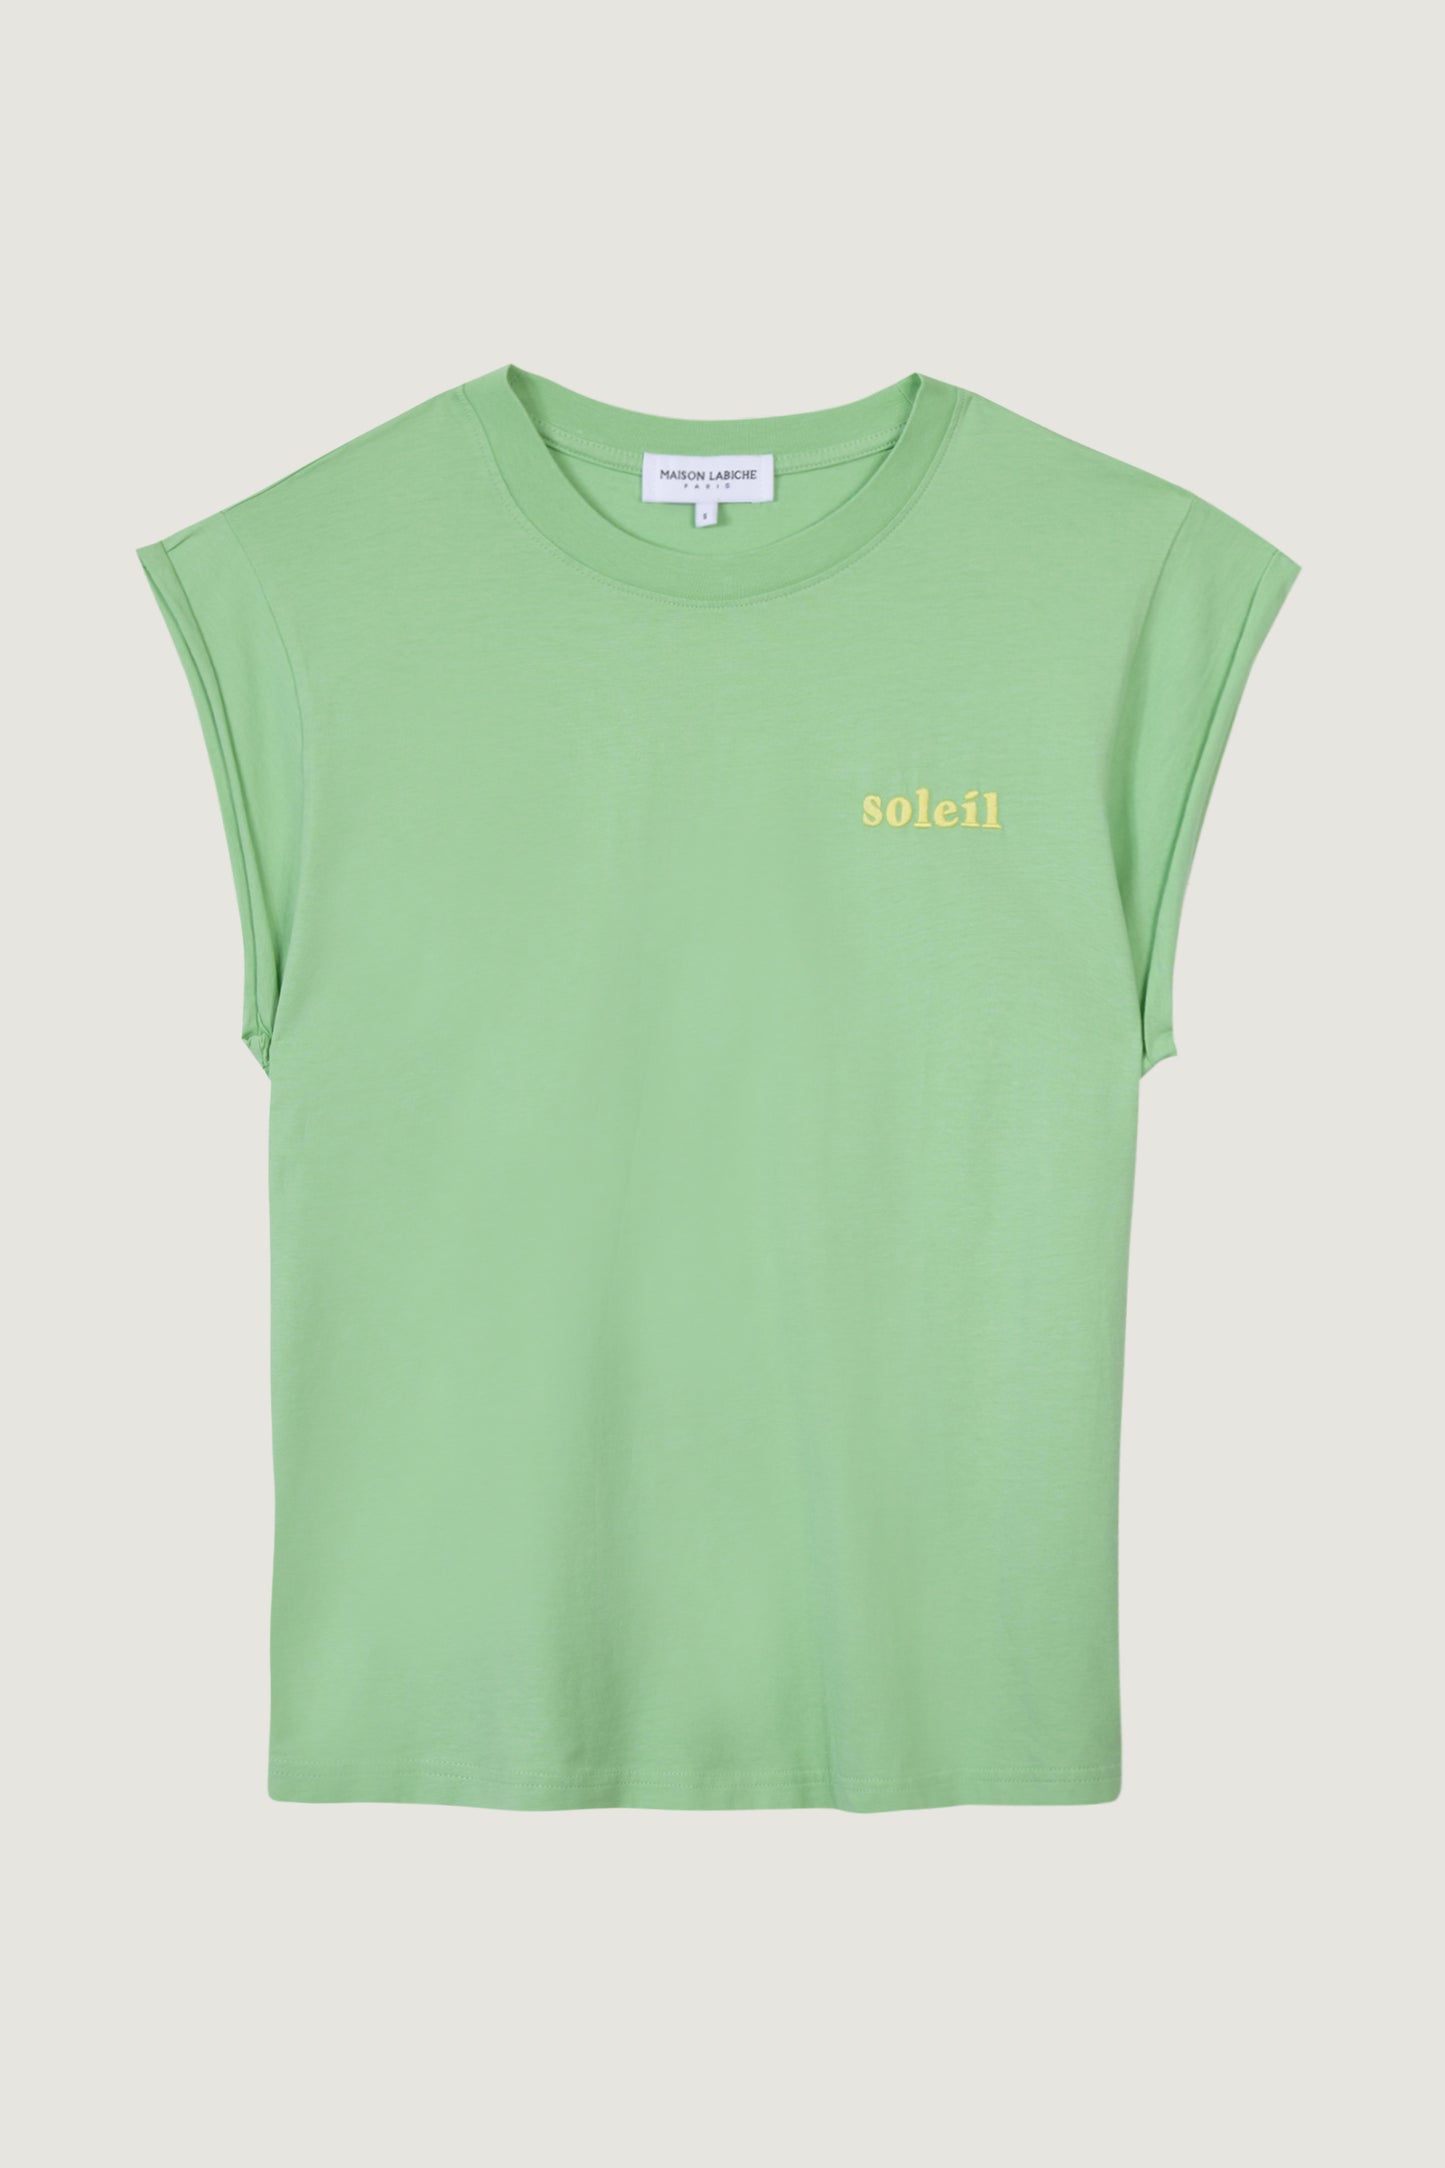 tee-shirt bio Maison Labiche vert brodé soleil en jaune